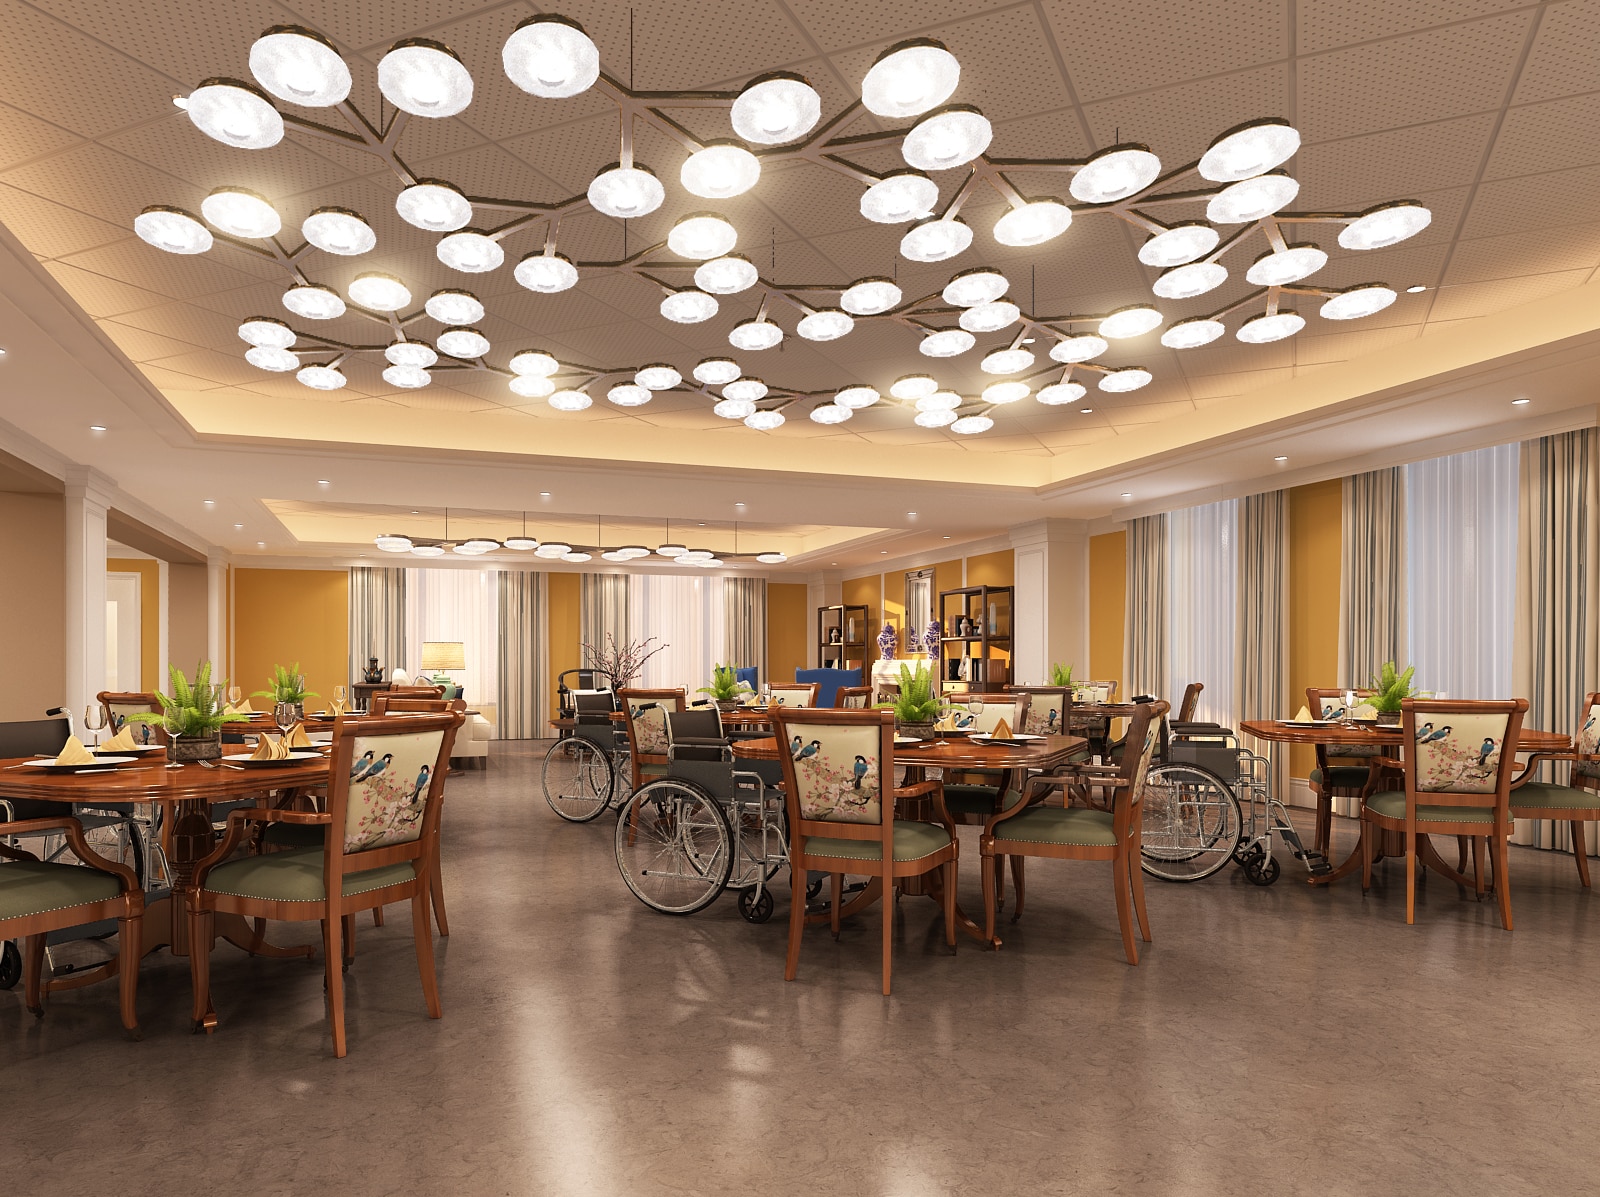 Lighting Emphasized in Dementia Care Facilities